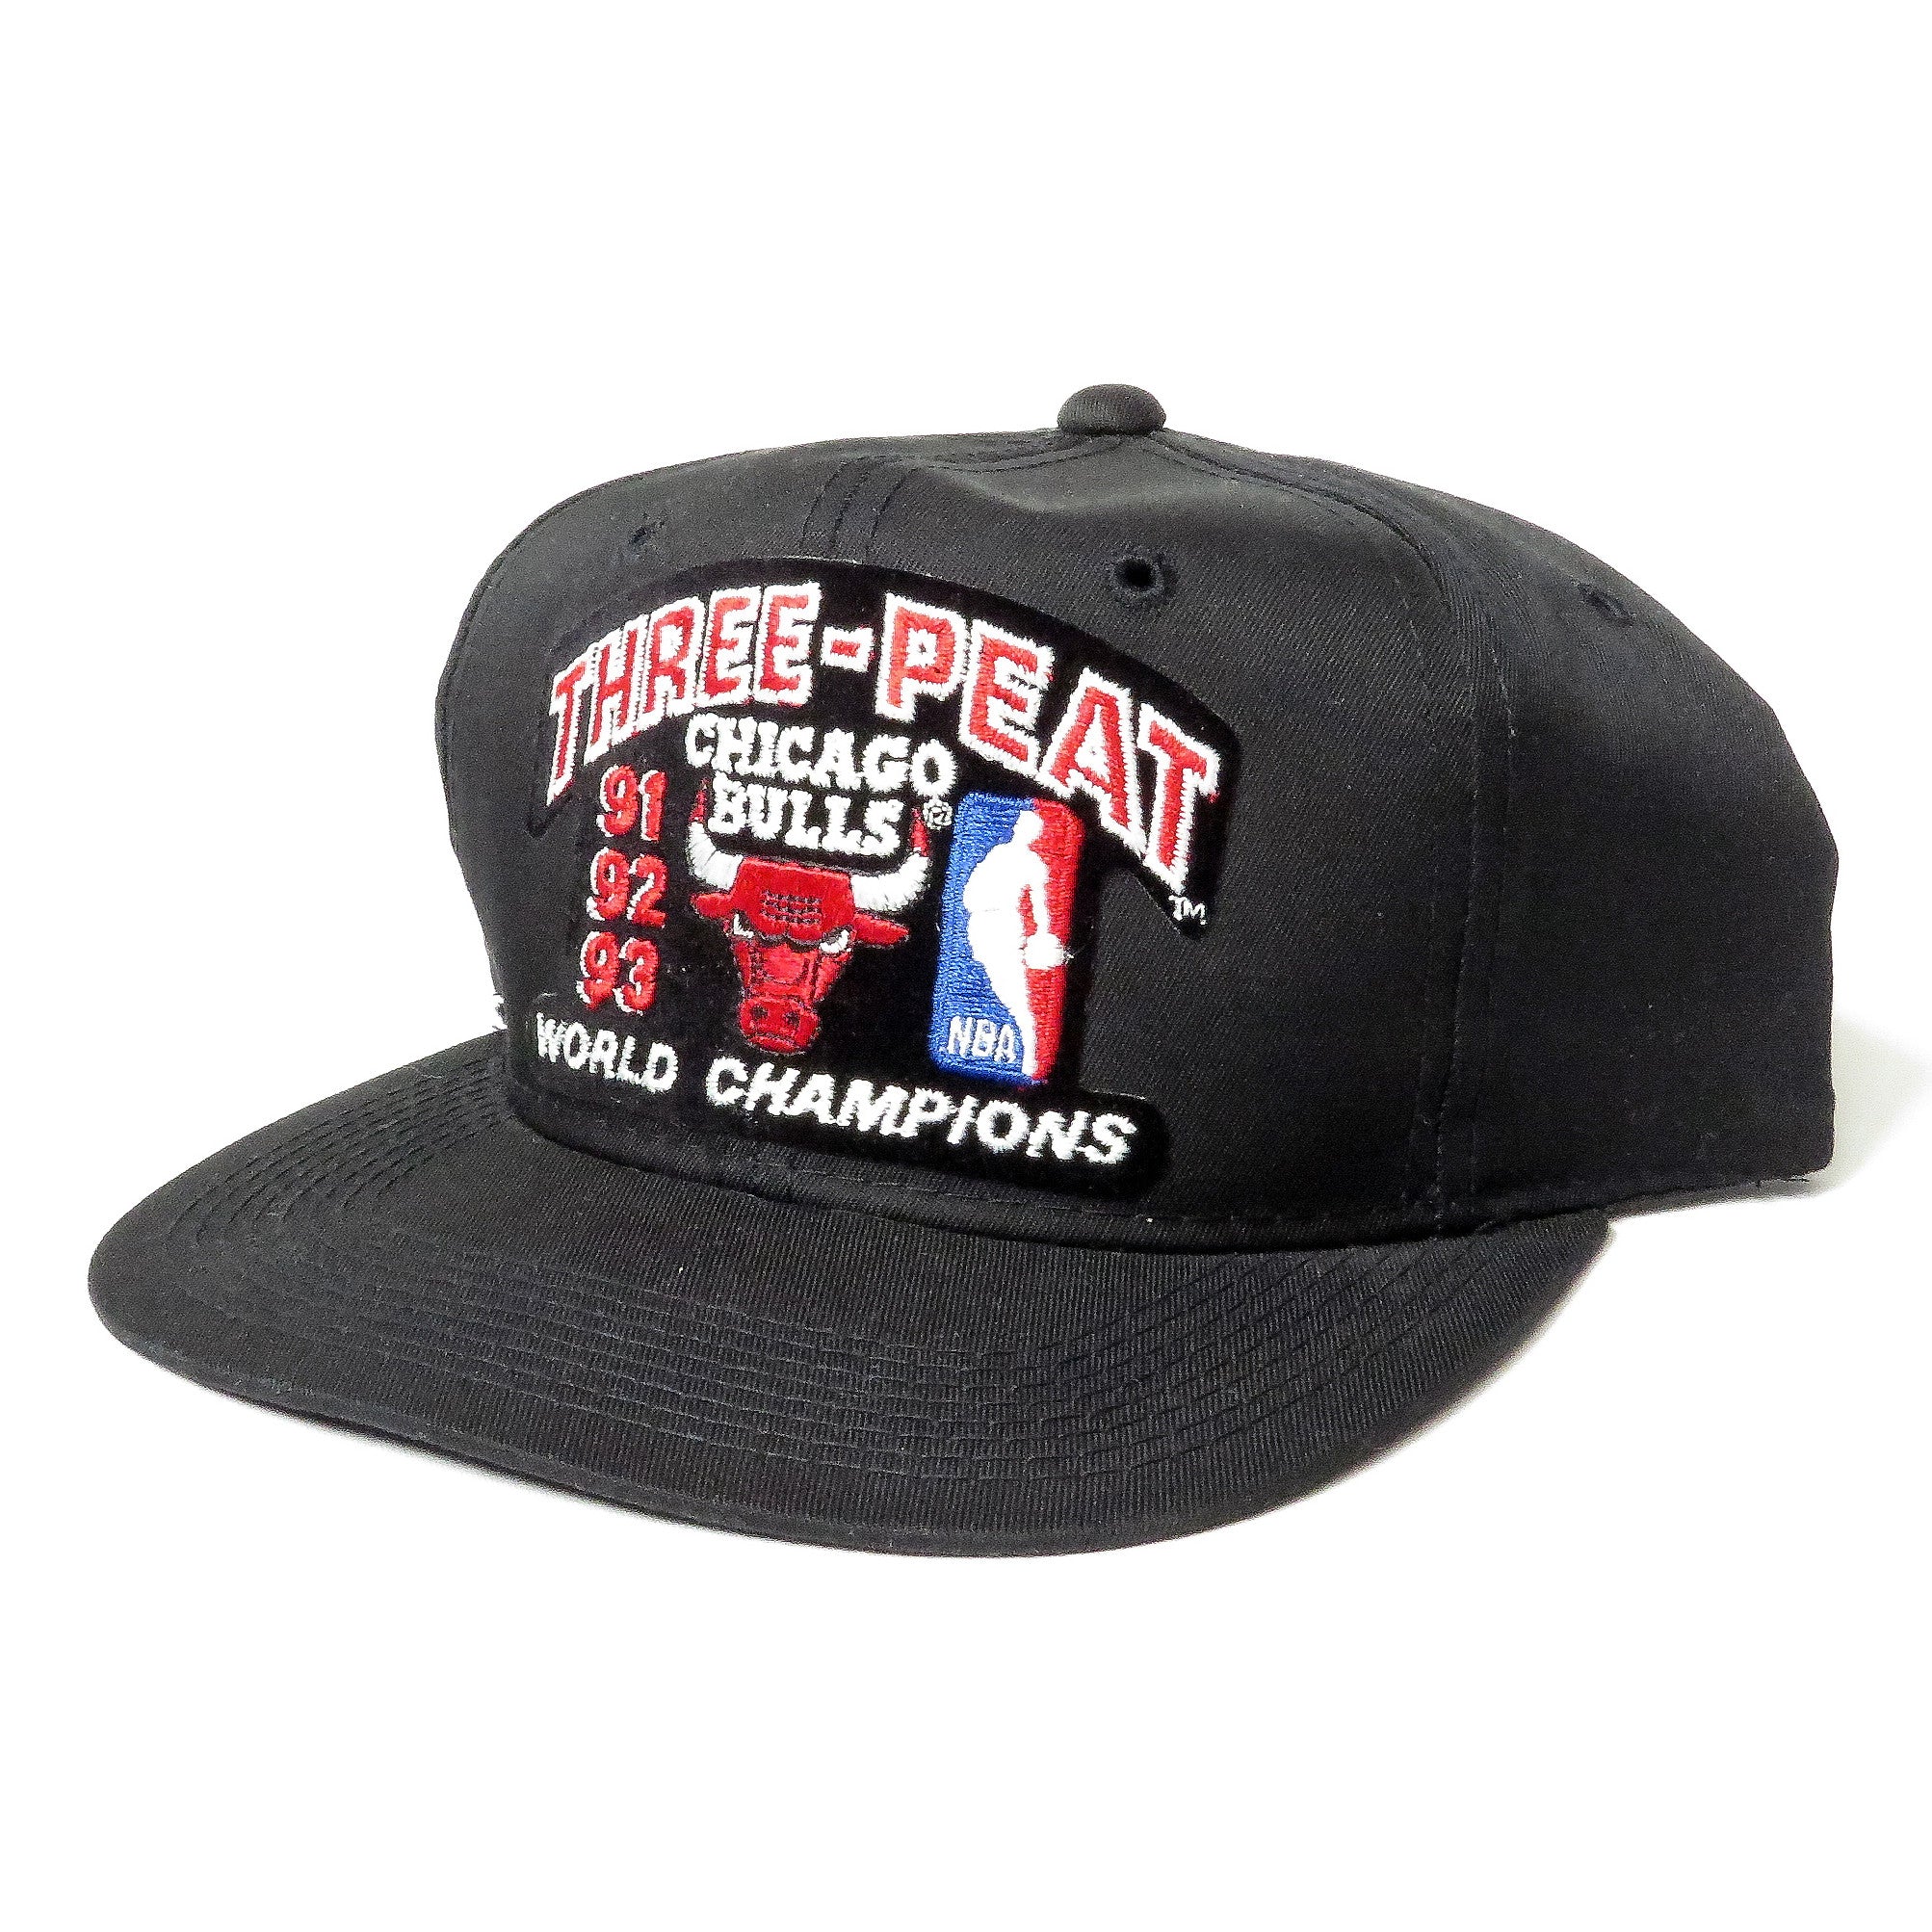 NEW Vintage Rare Chicago Bulls NBA Basketball 3 Peat Champions Hat